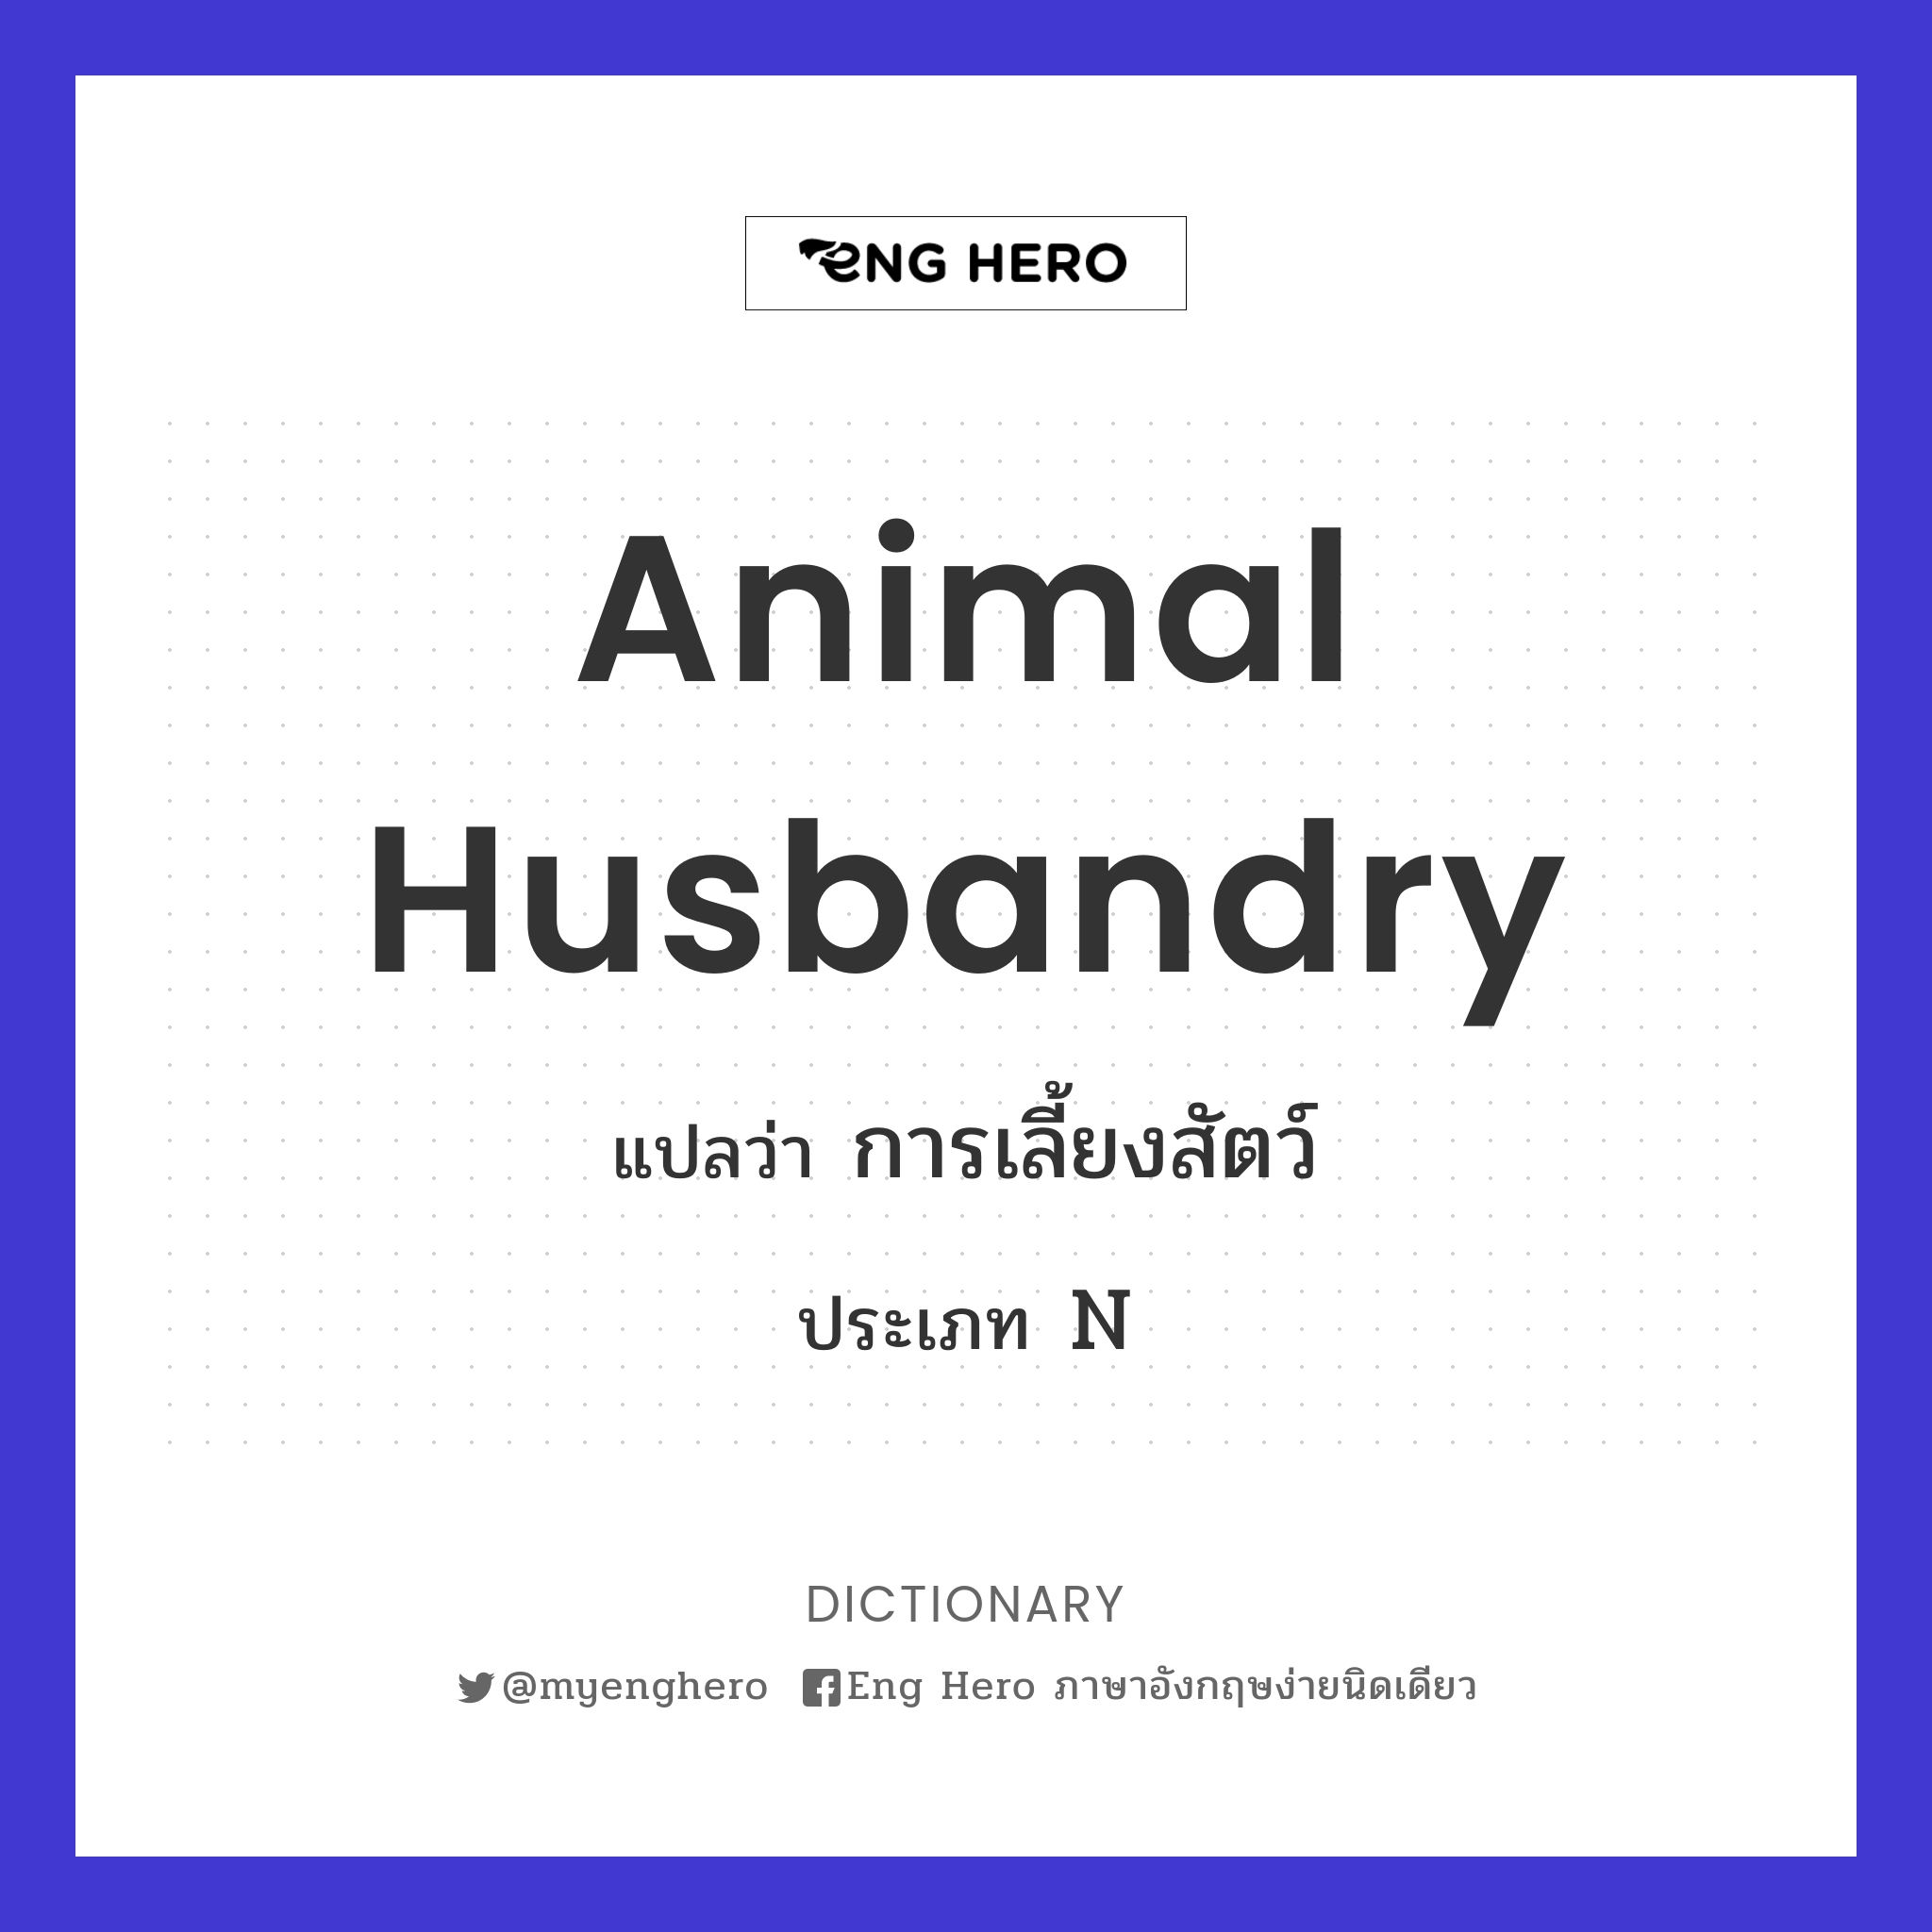 animal husbandry